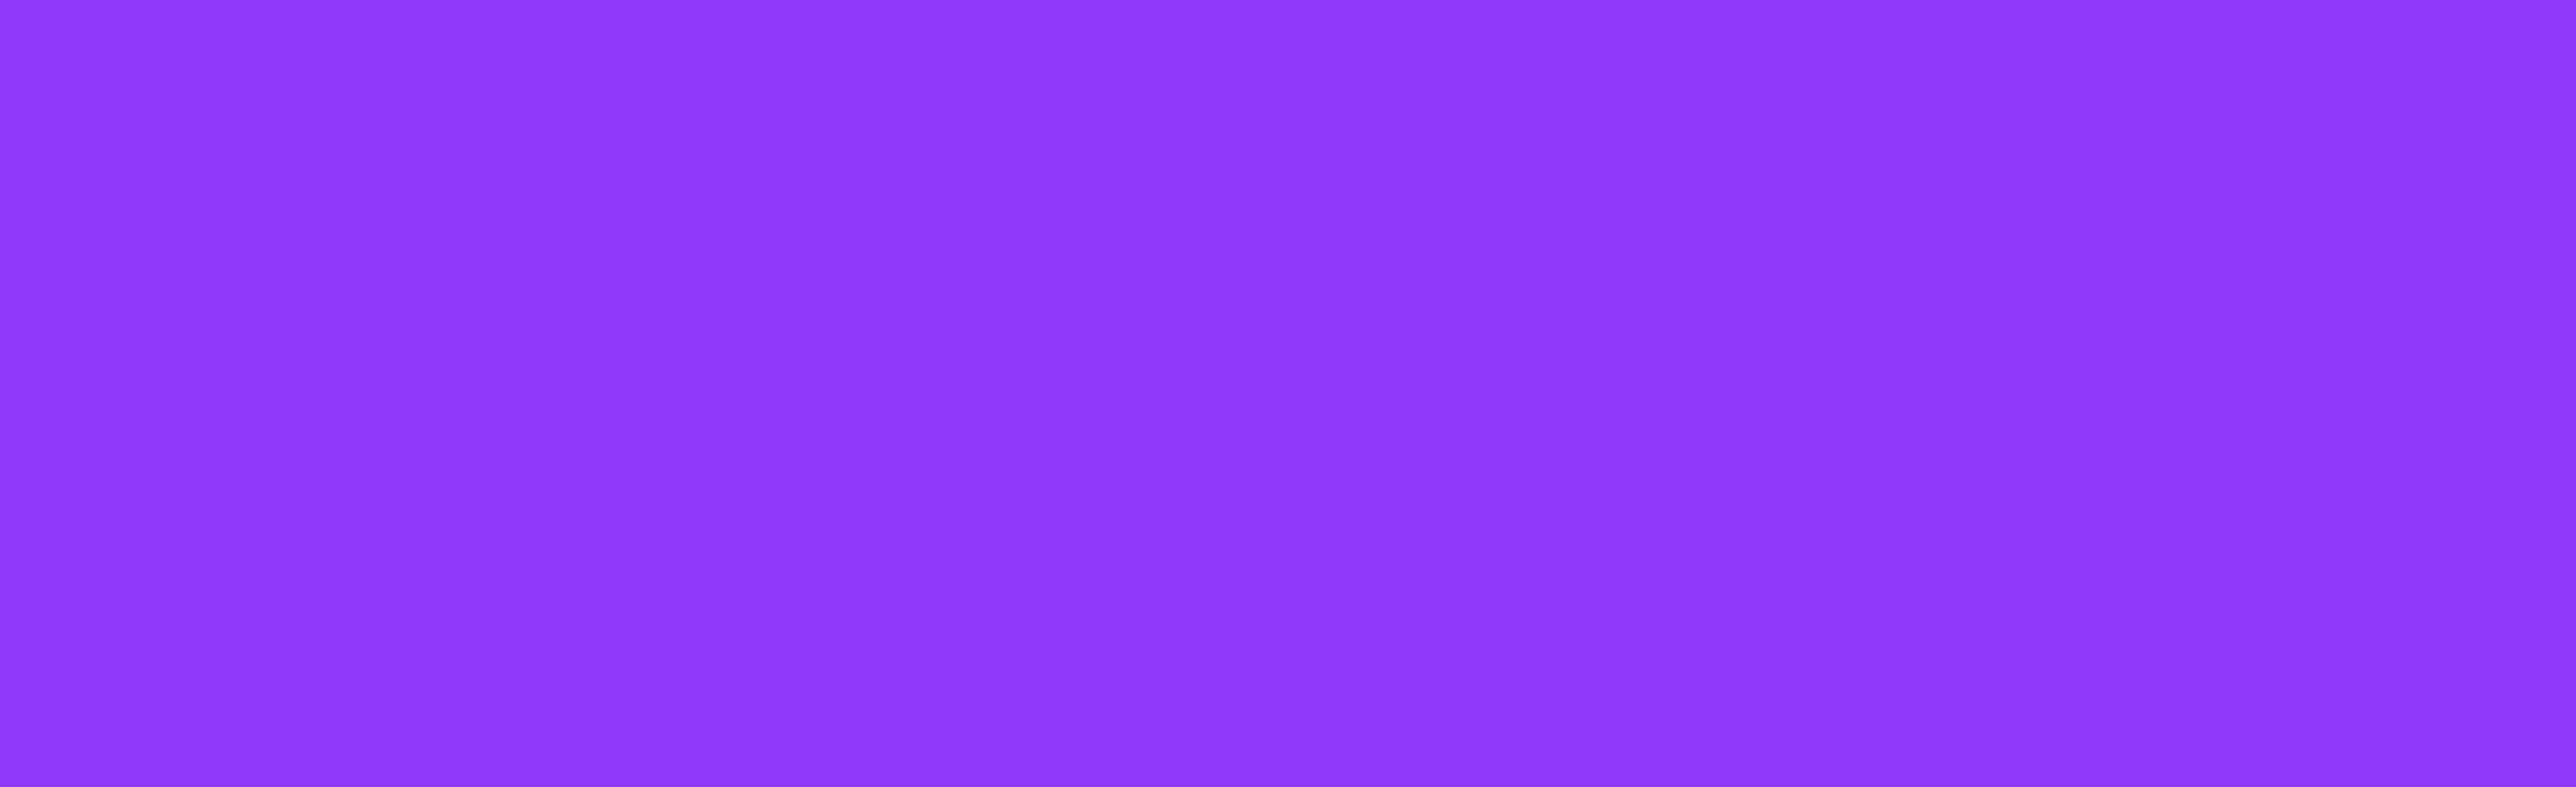 Art Knight Purple